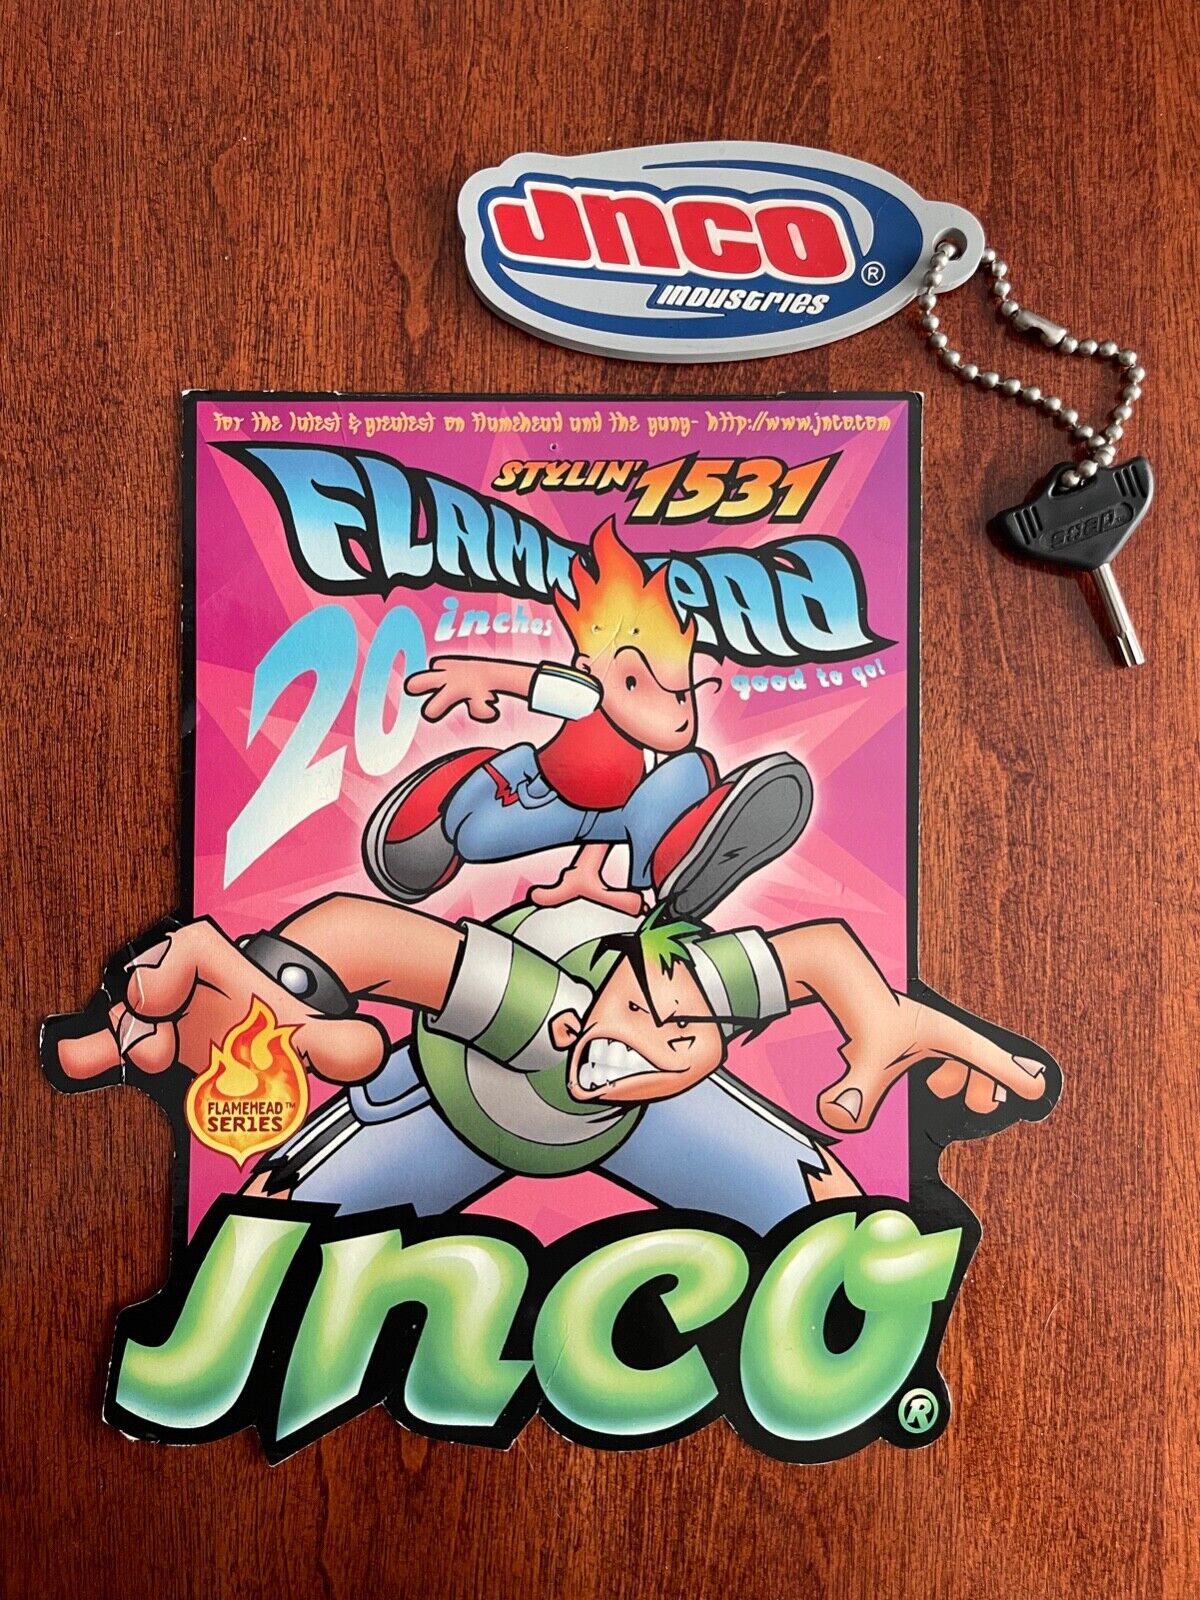 Rare Jnco Jeans Industries Keychain w/Soap Shoes Key + Cardboard Pocket Tag